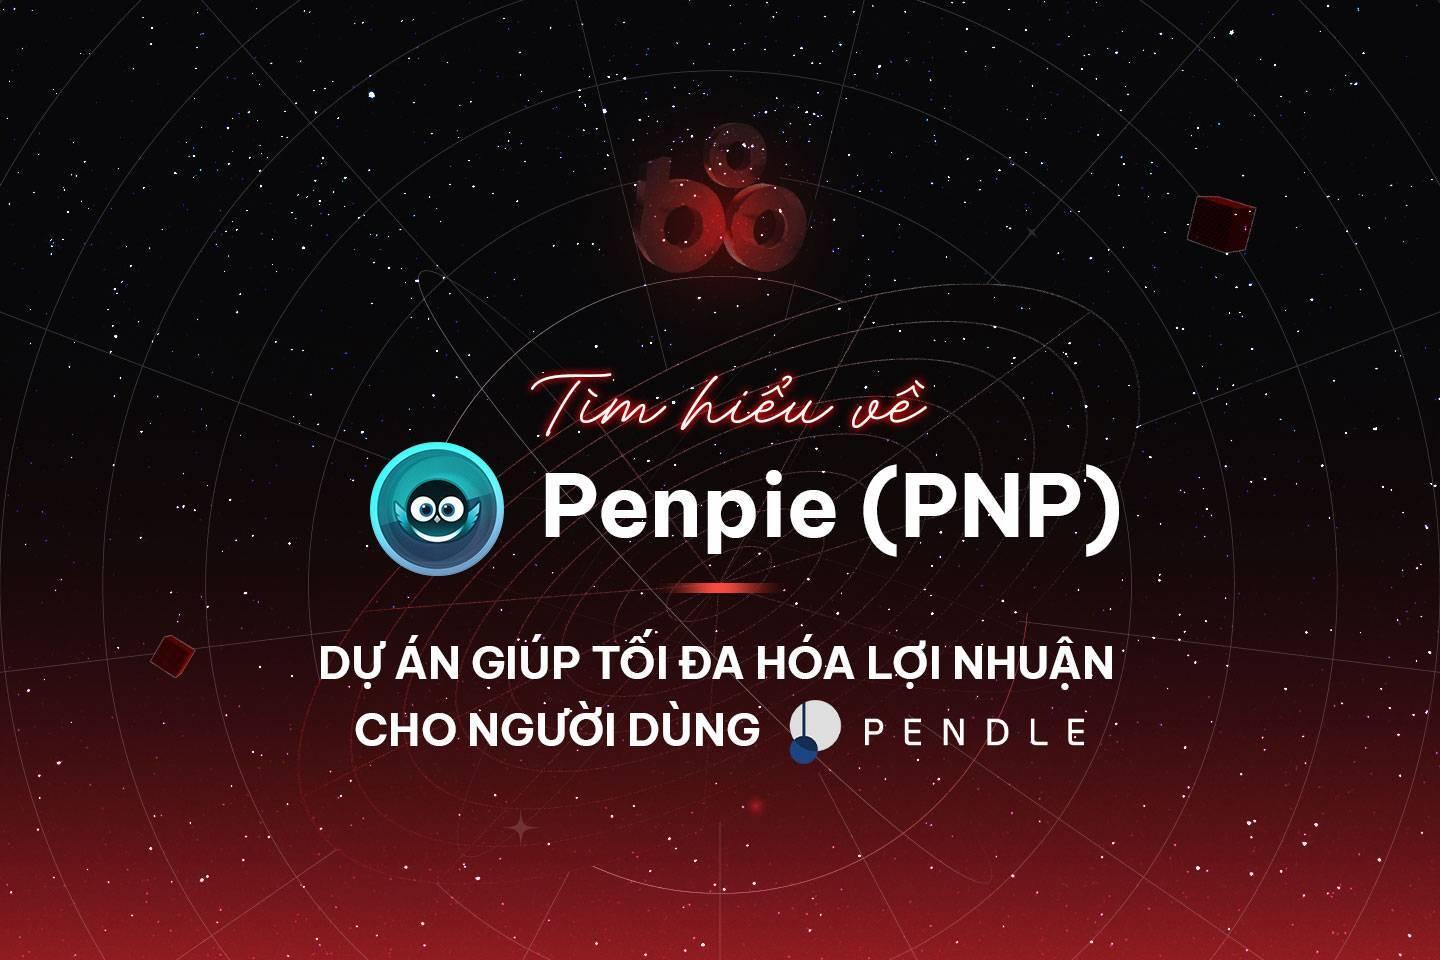 tim-hieu-ve-penpie-pnp-du-an-giup-toi-da-hoa-loi-nhuan-cho-nguoi-dung-pendle